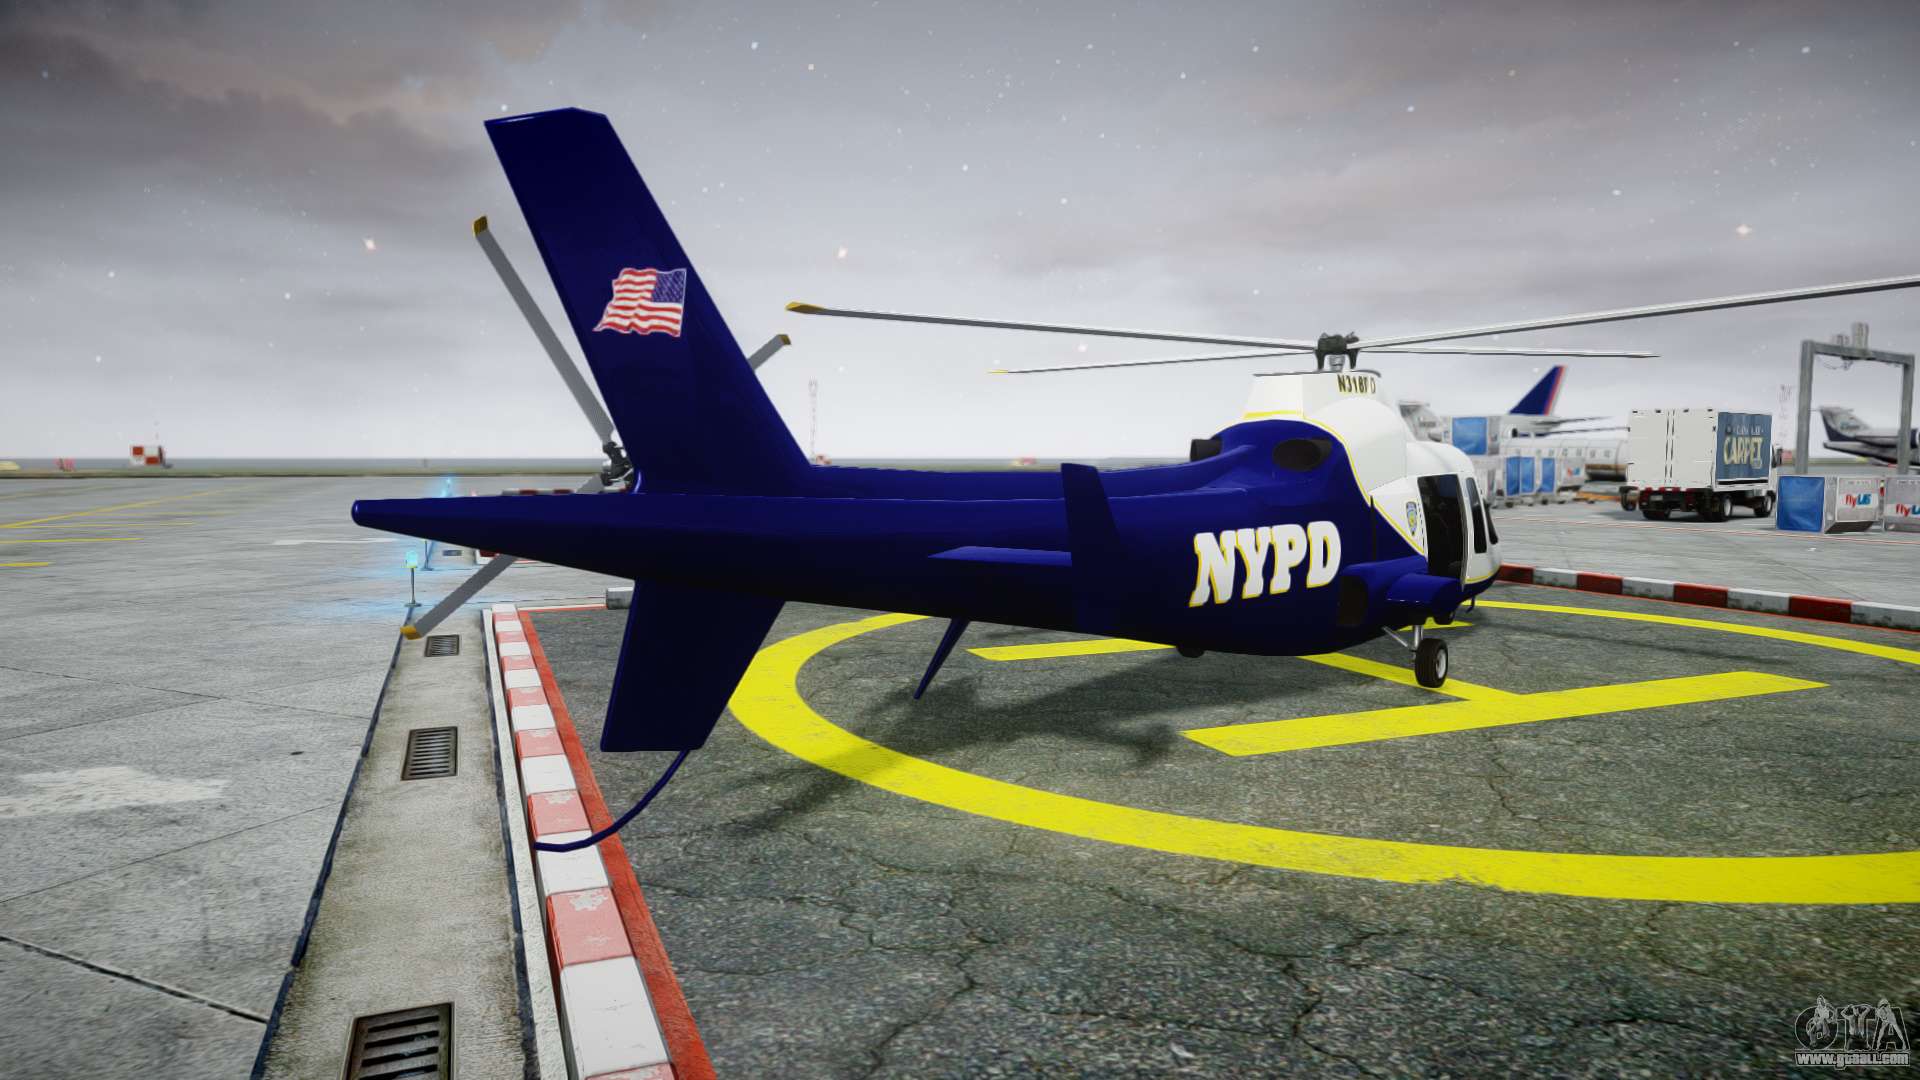 GTA IV Nation - Conseguir helicóptero Switf 